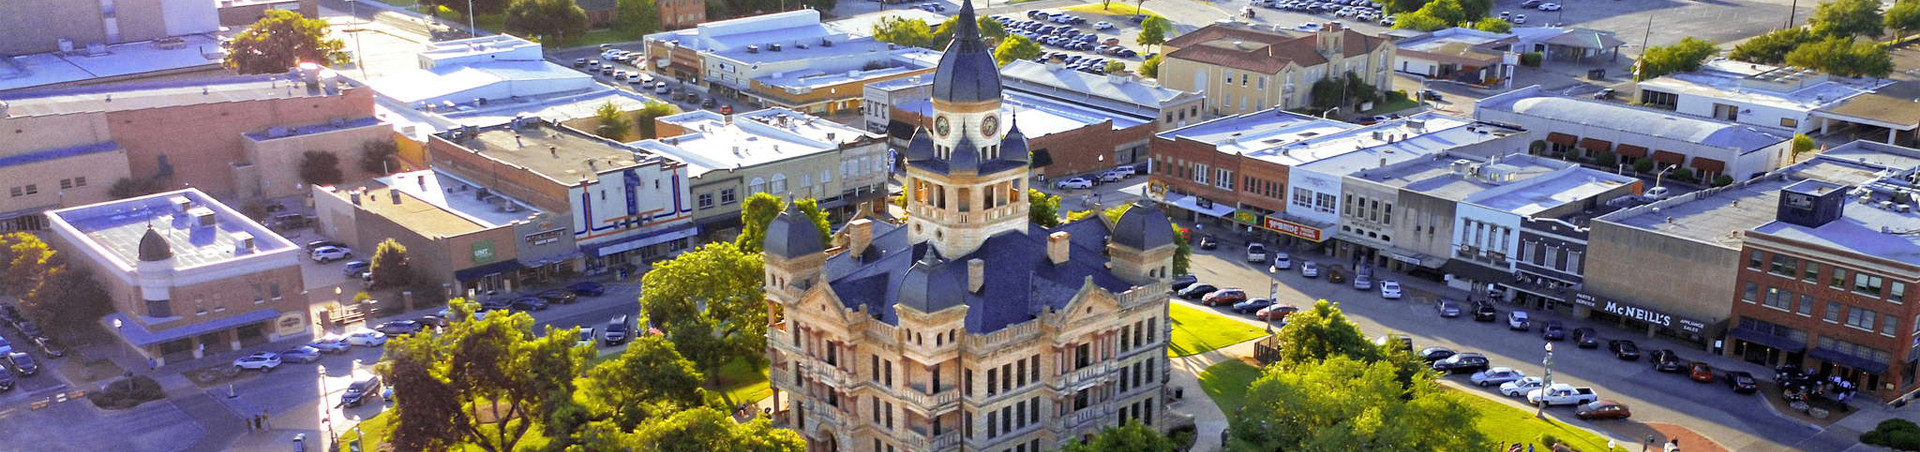 University of North Texas Campus